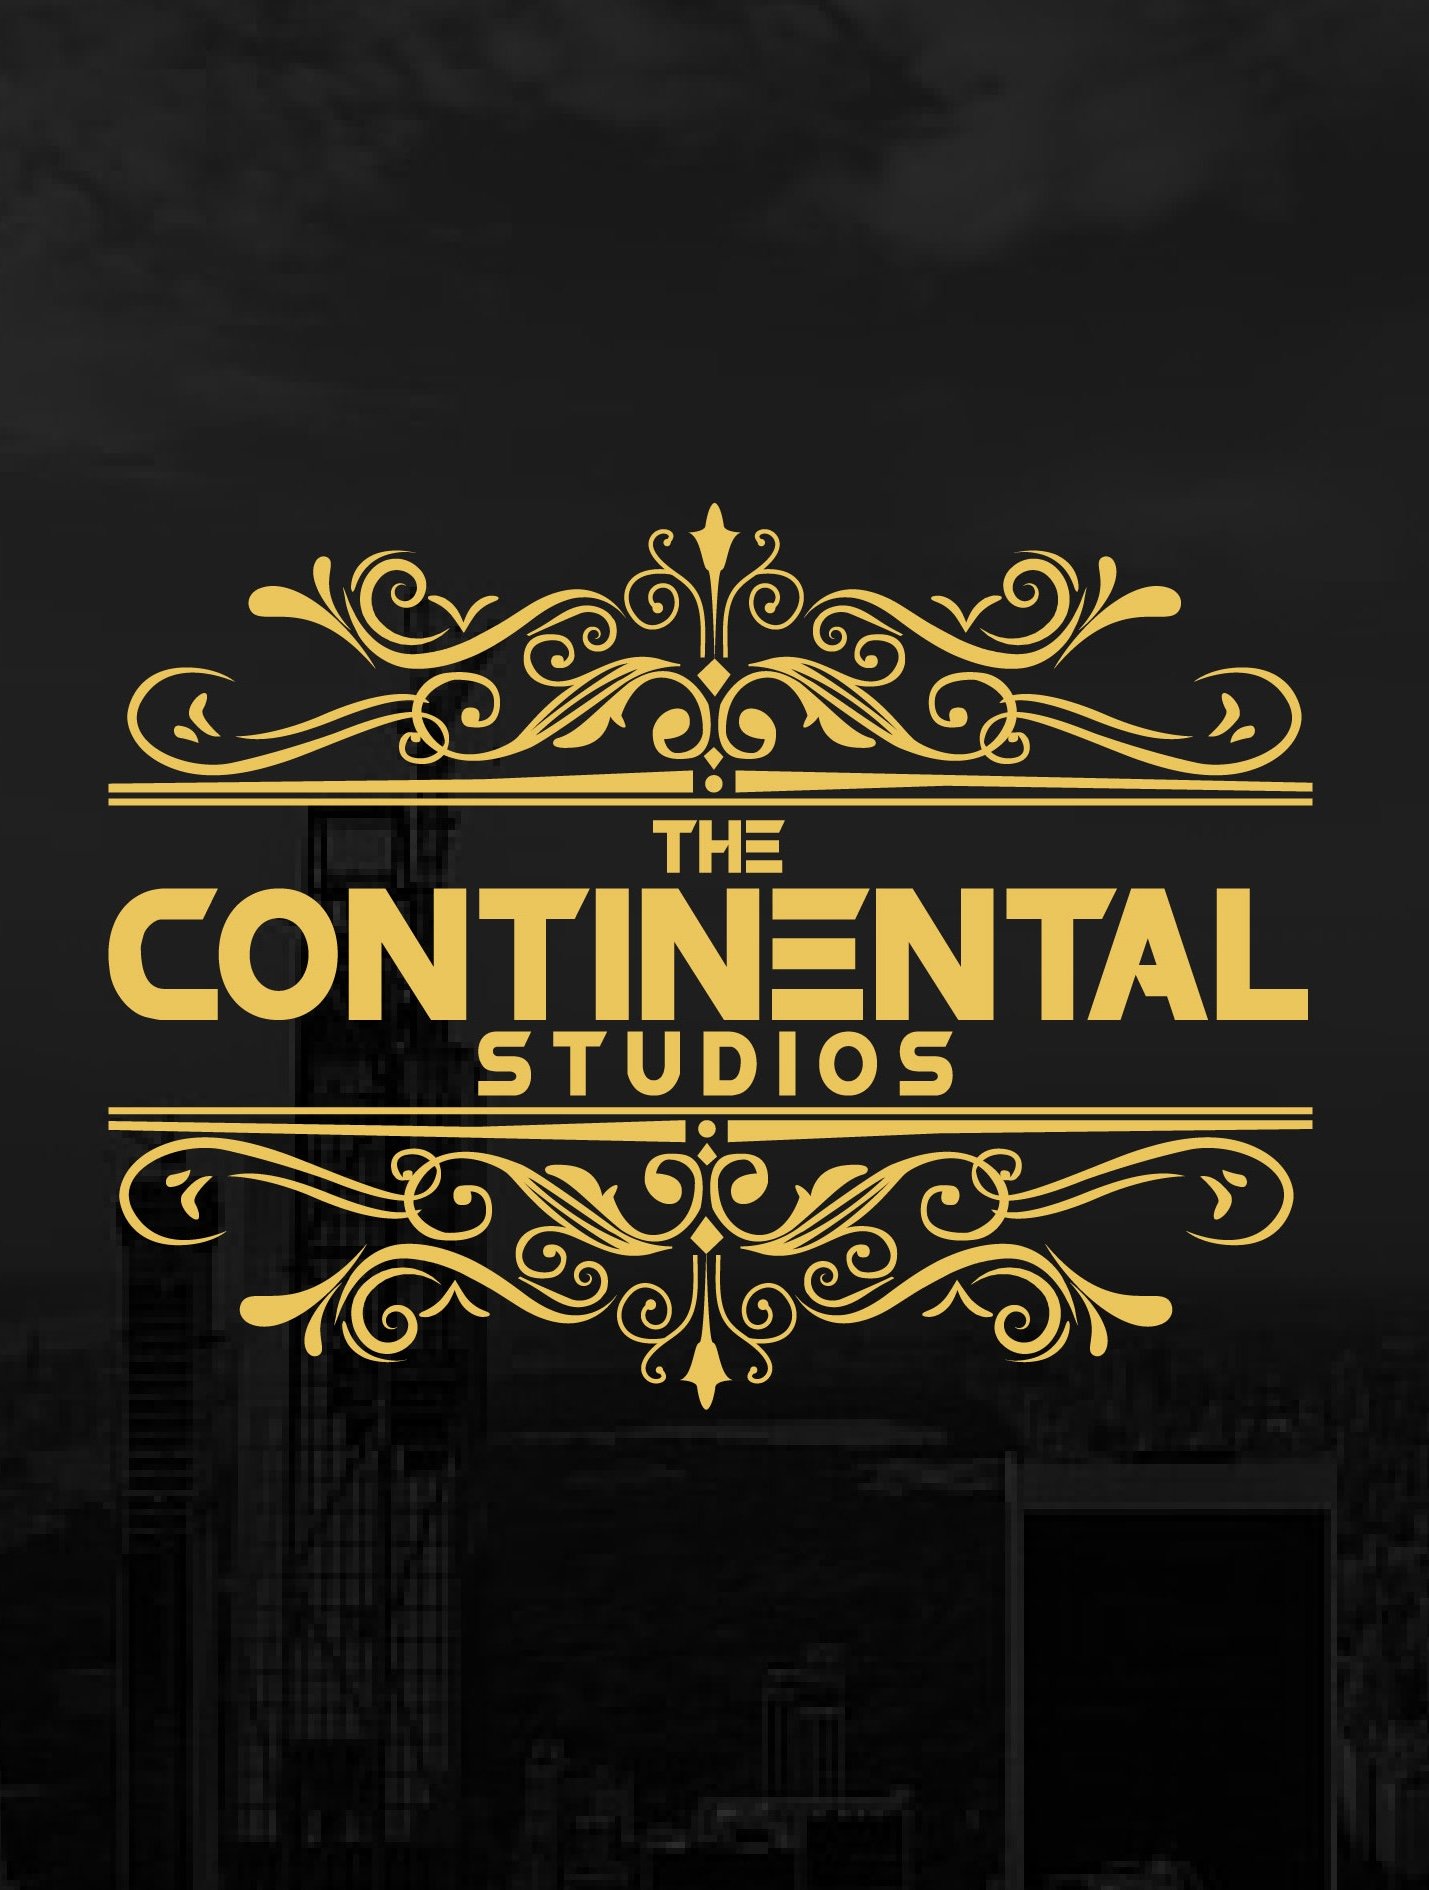 The Continental Studios